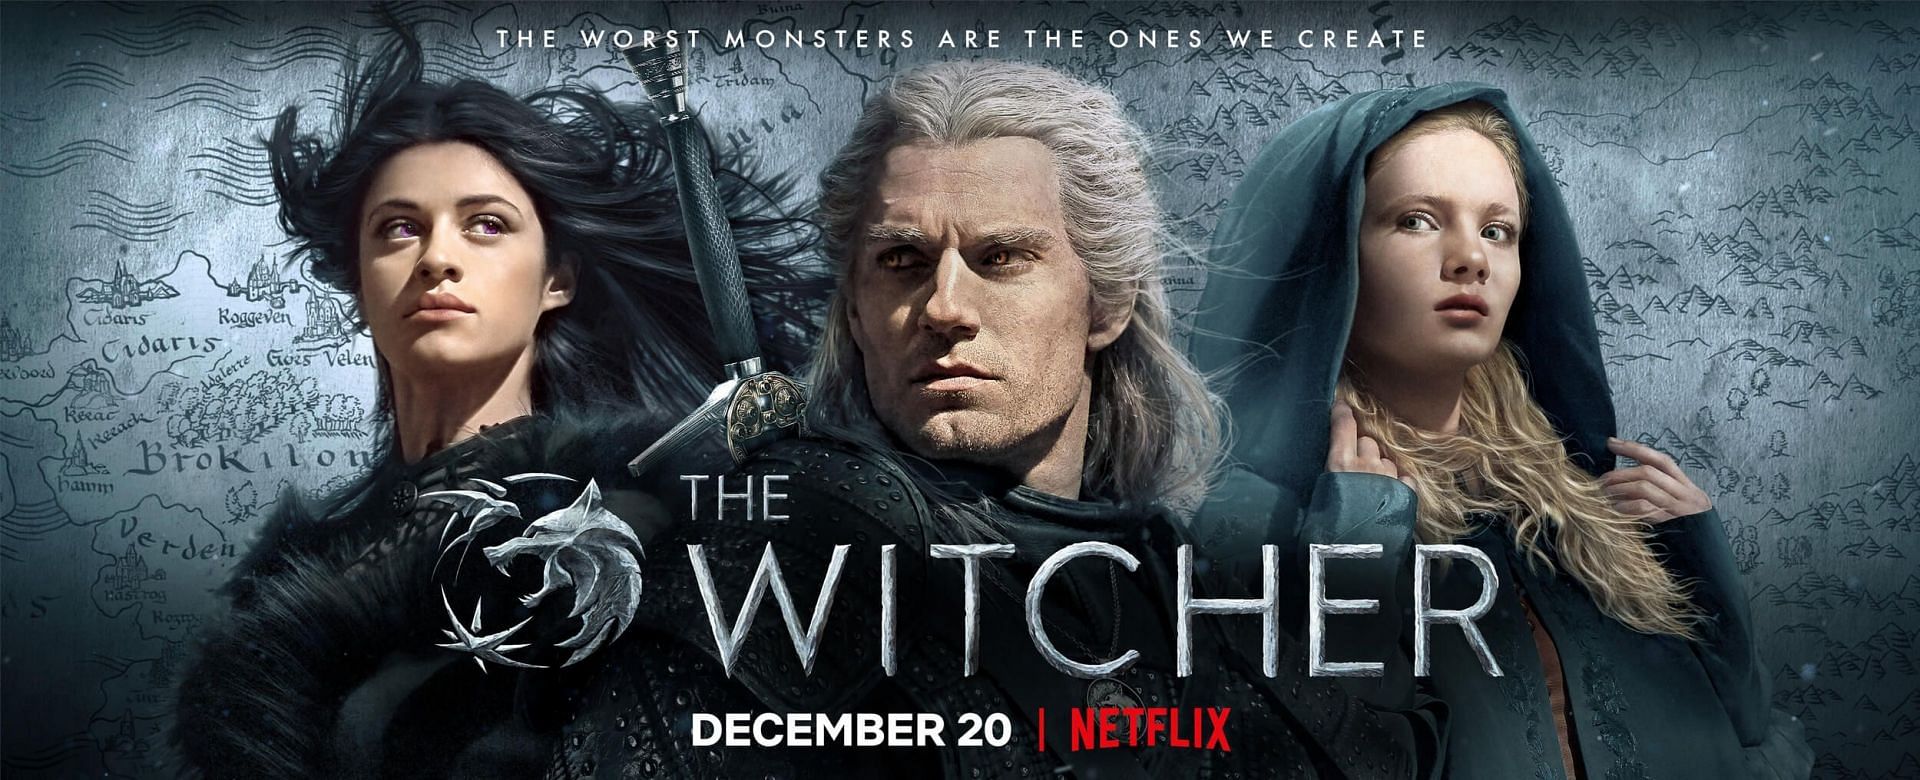 The Witcher (Image via Netflix)